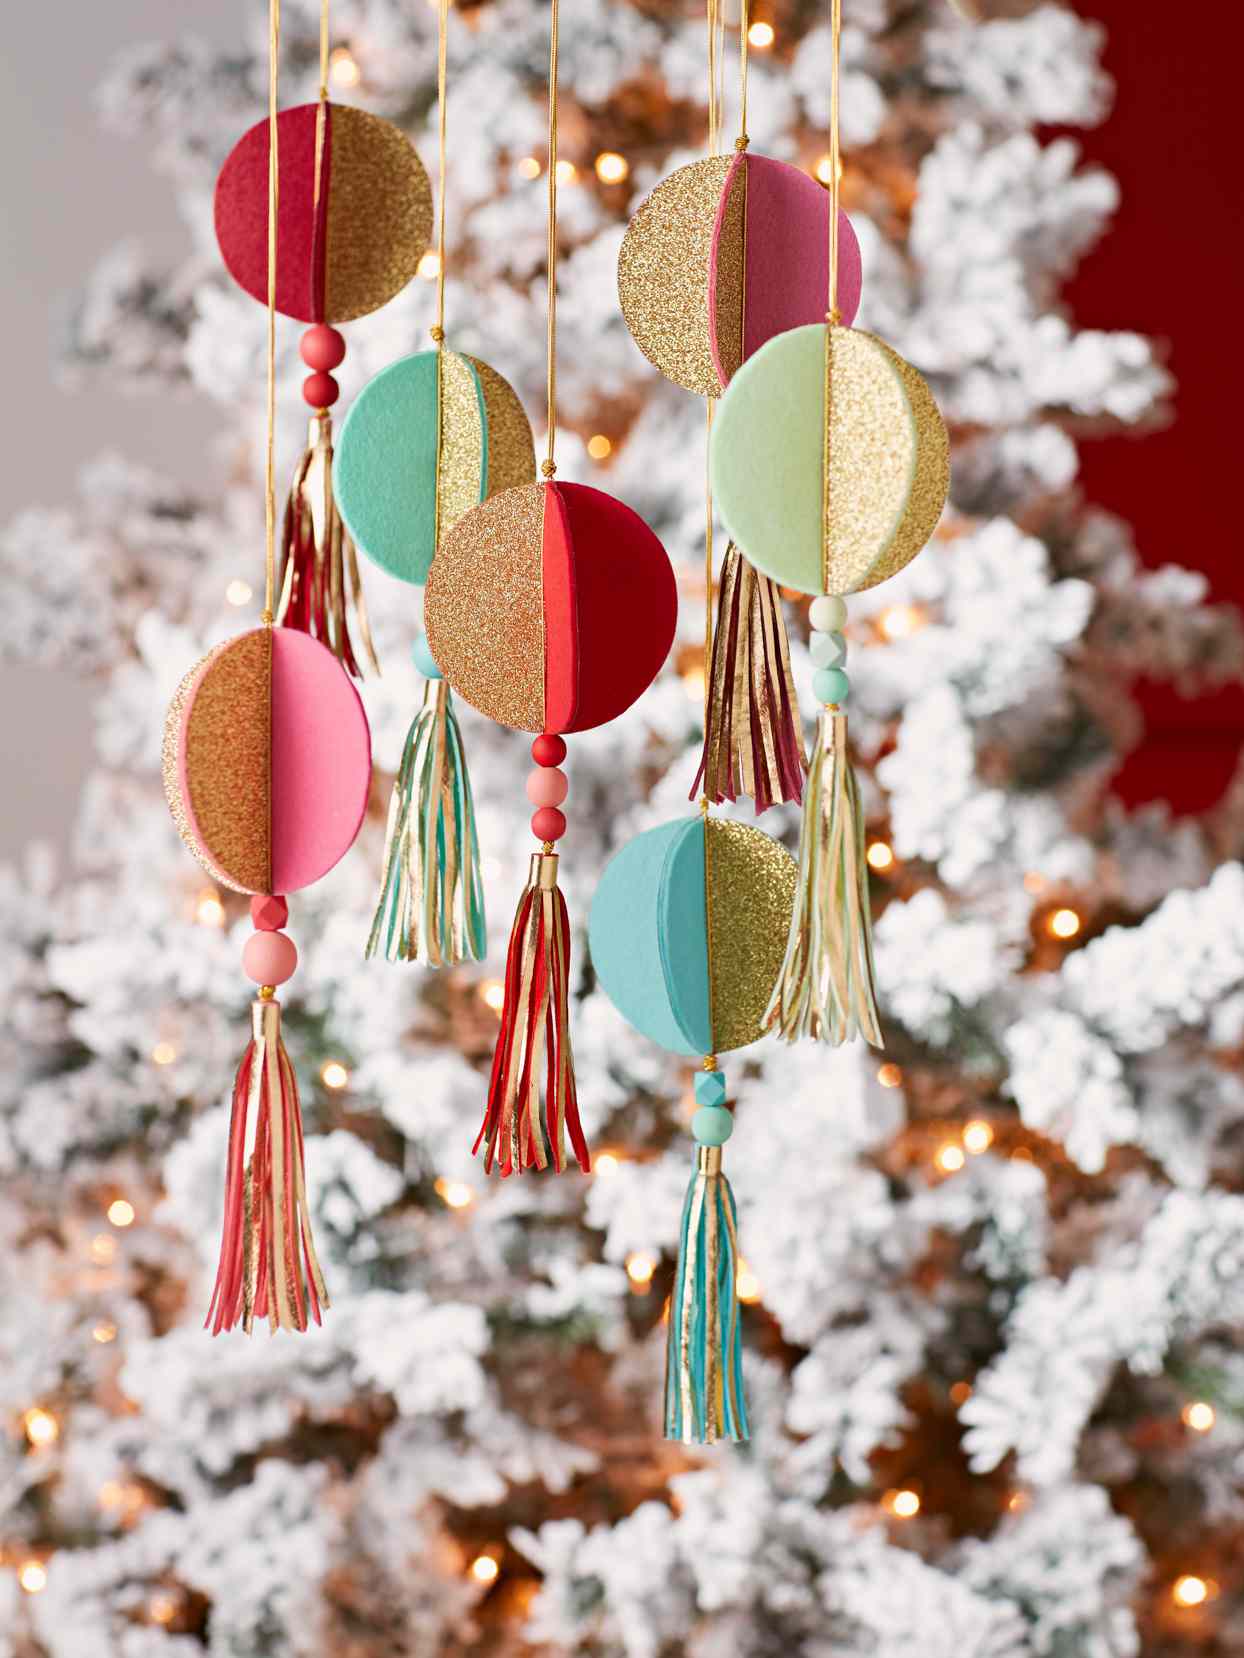 Farmhouse Lantern Barn Chicken Christmas Tree Ornaments Choose Style/Quantity-C